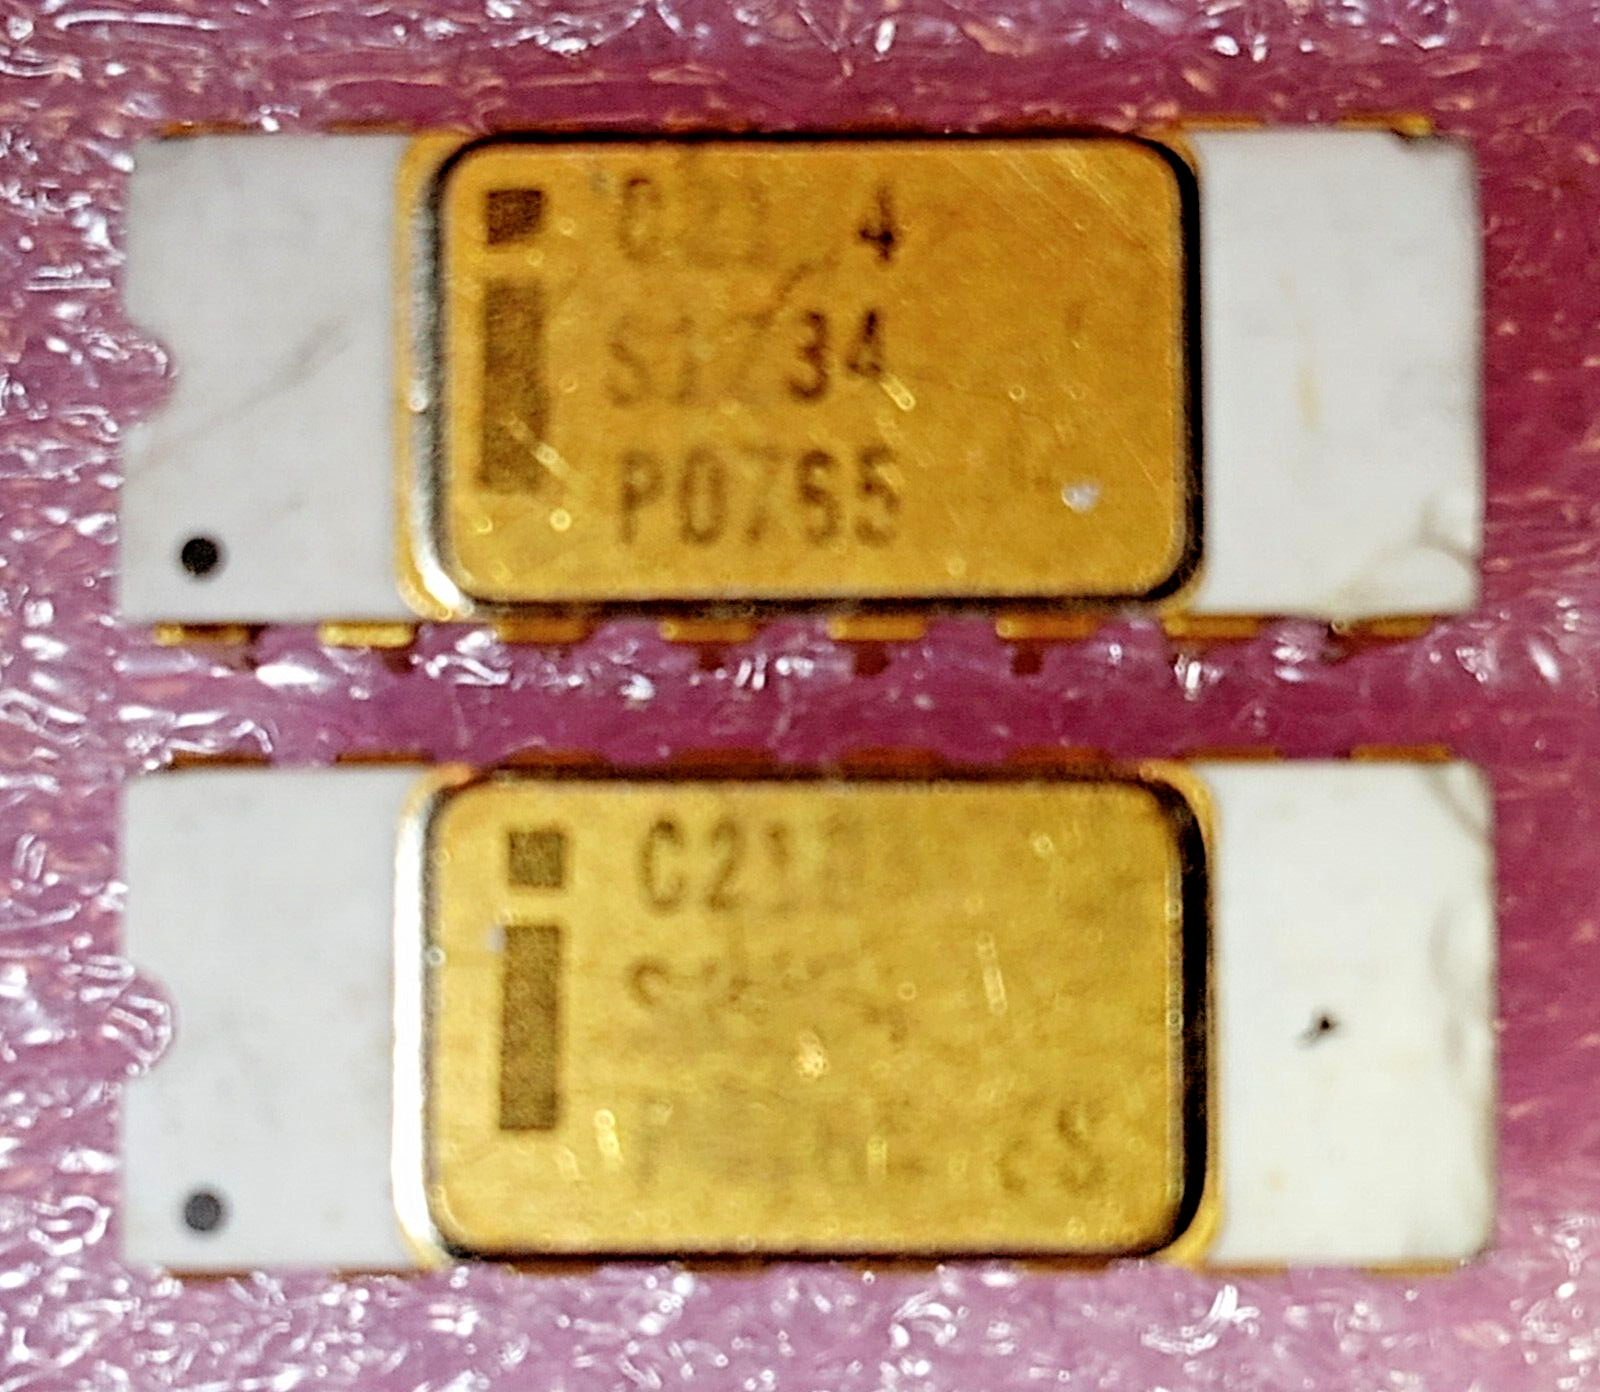 Apple 1 Intel C2104 Memory Gold CERDIP 4096x1 DRAM Vintage LOT of 2 PCS TRS-80